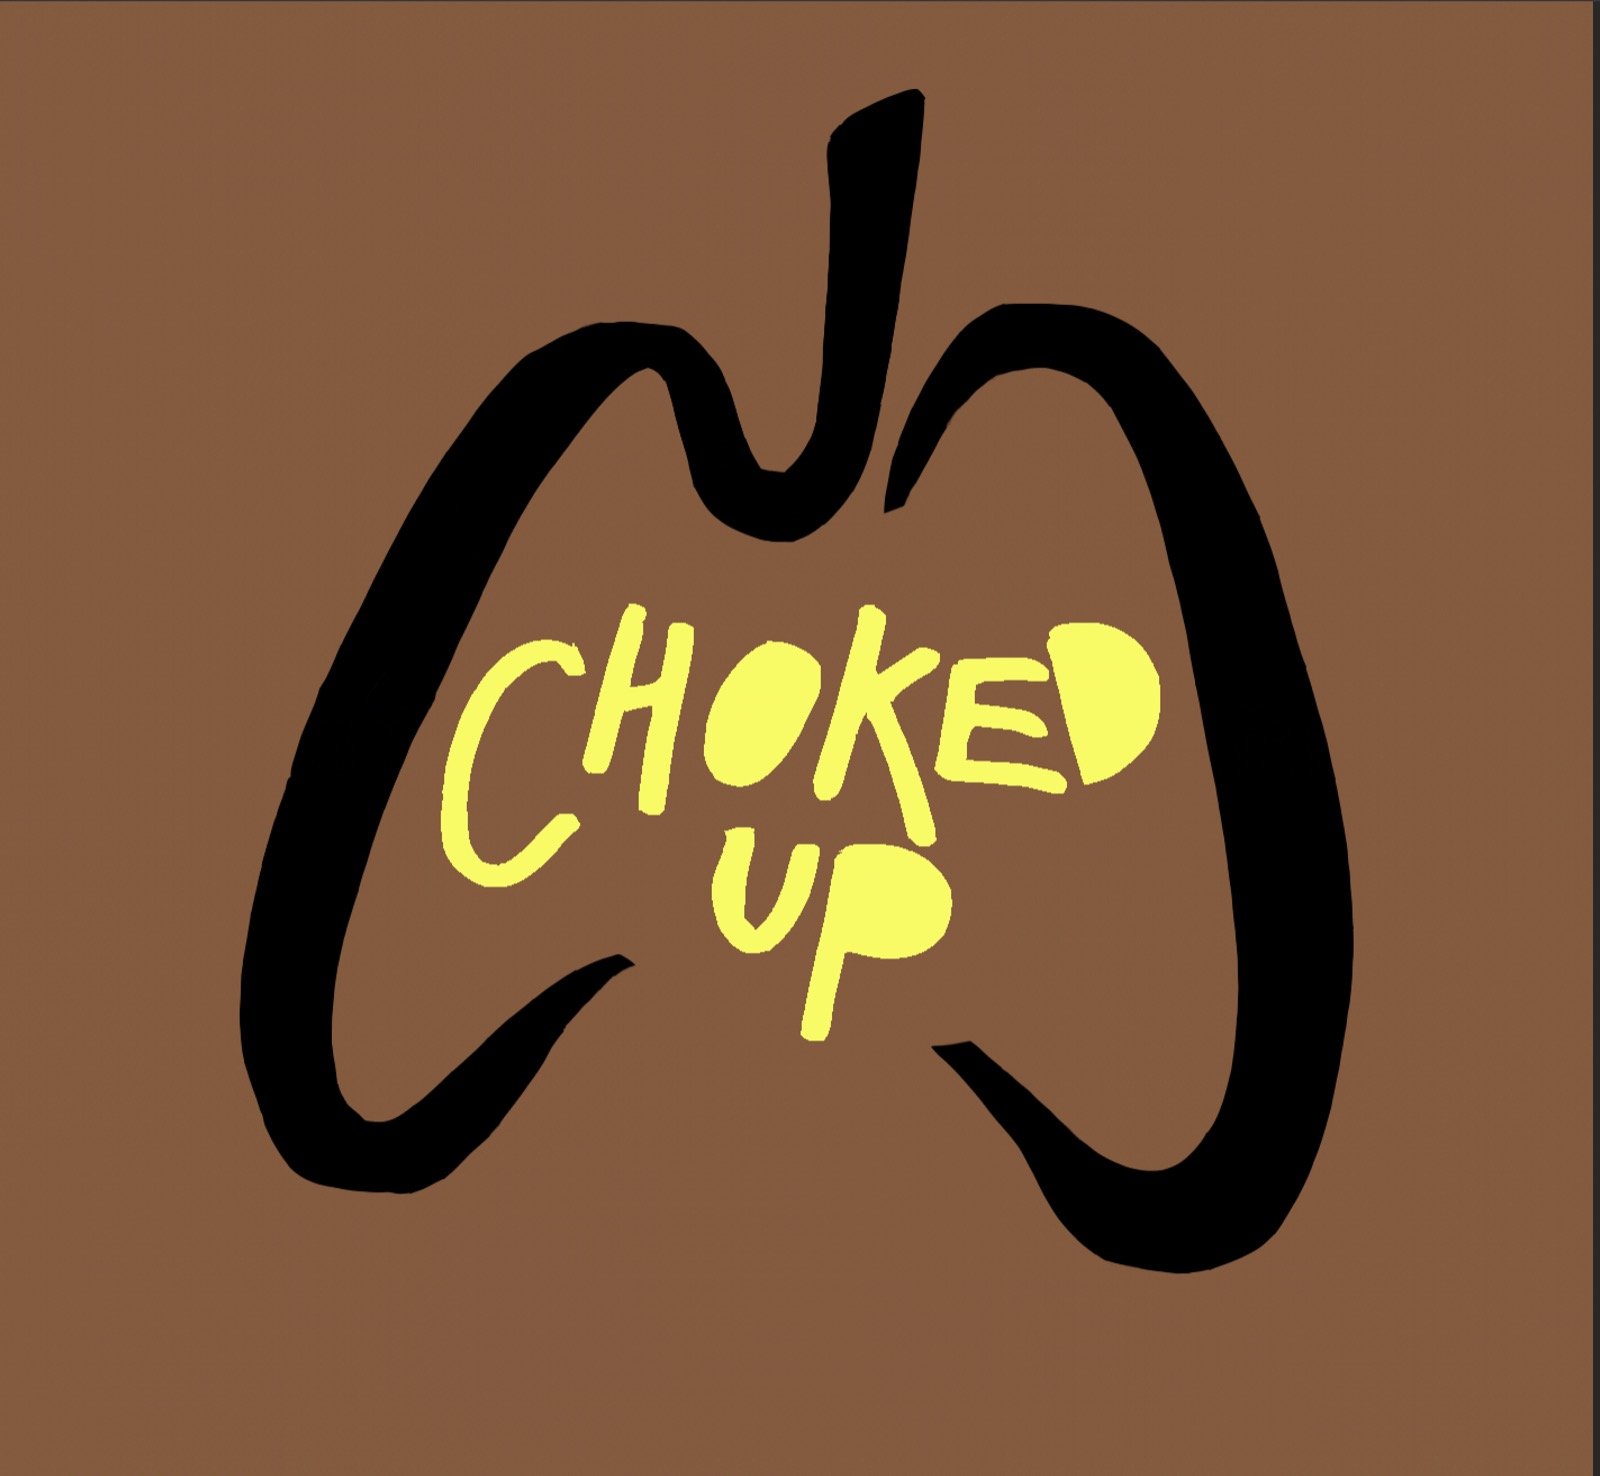 choked up logo